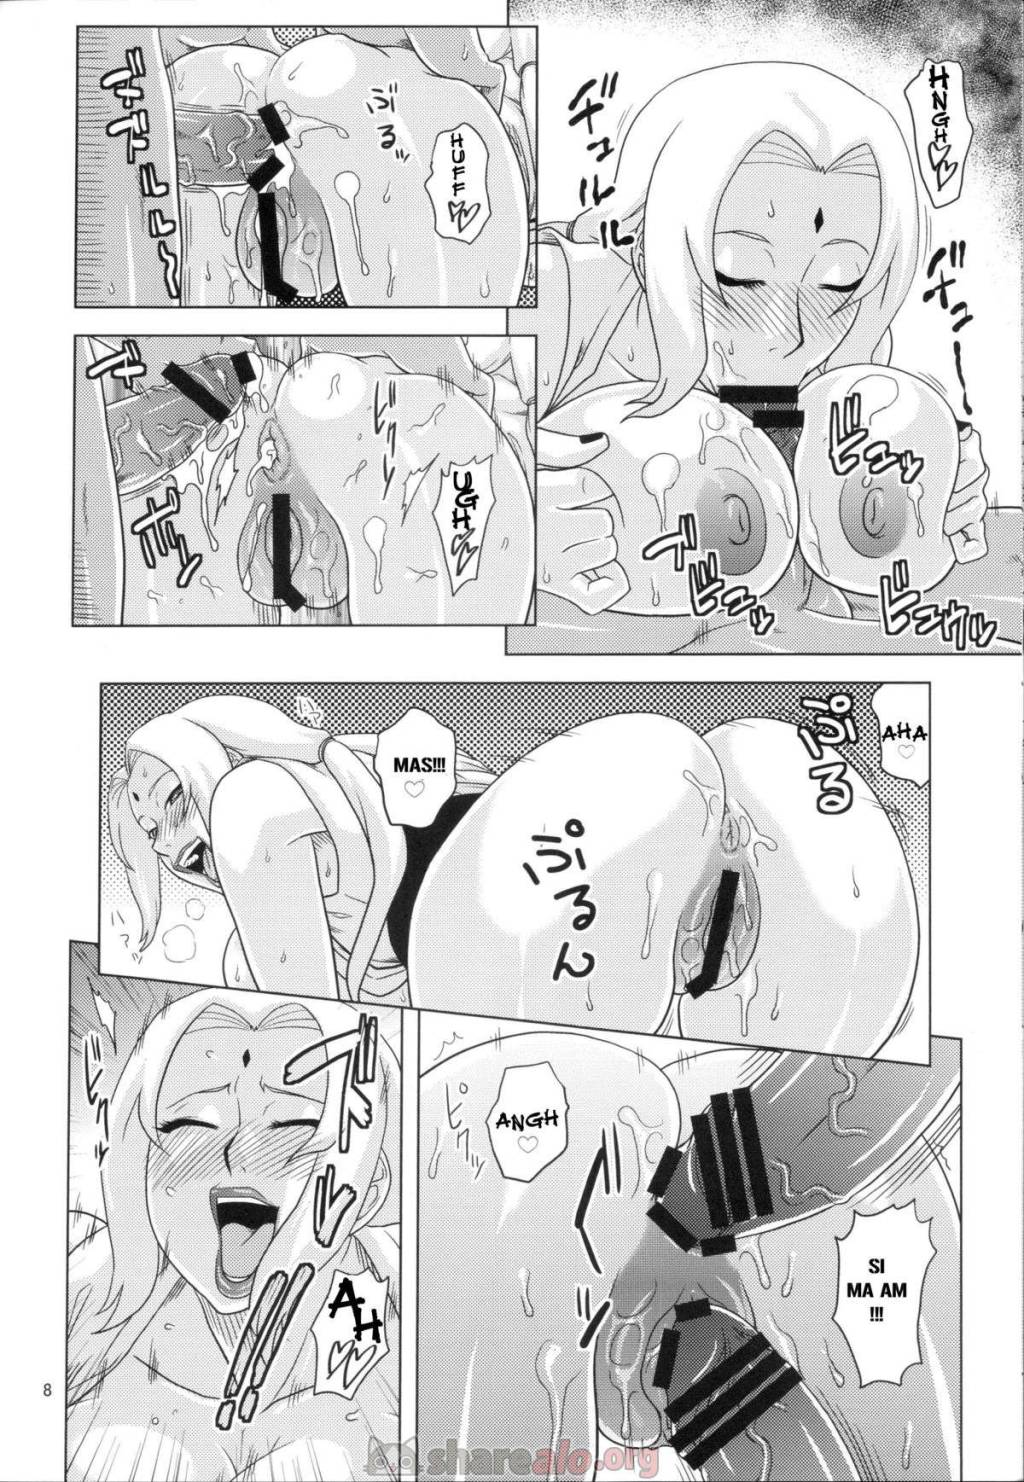 Naruhon - 9 - Comics Porno - Hentai Manga - Cartoon XXX